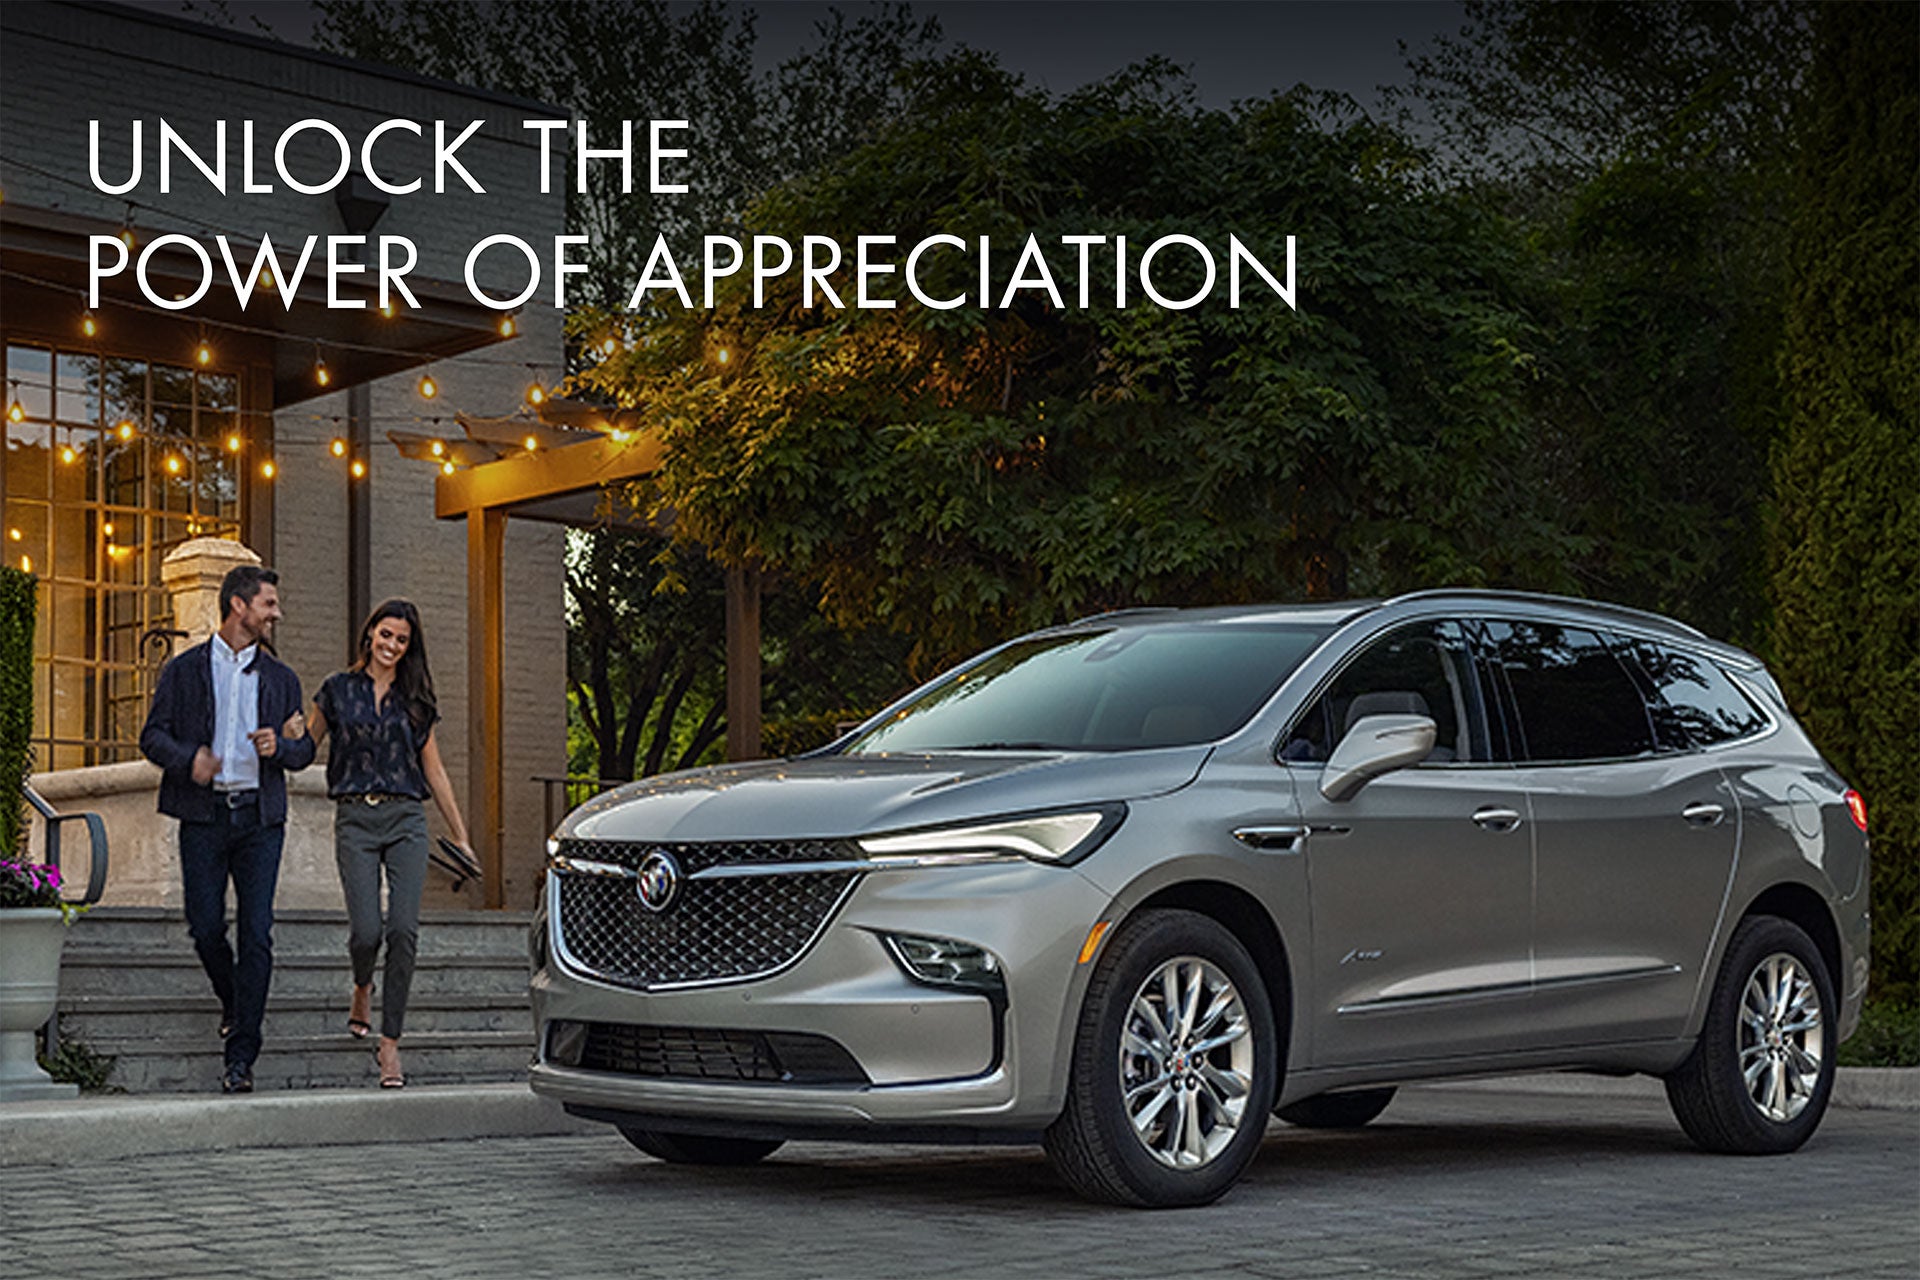 Unlock the power of appreciation | Olson Chevrolet in Redwood Falls MN